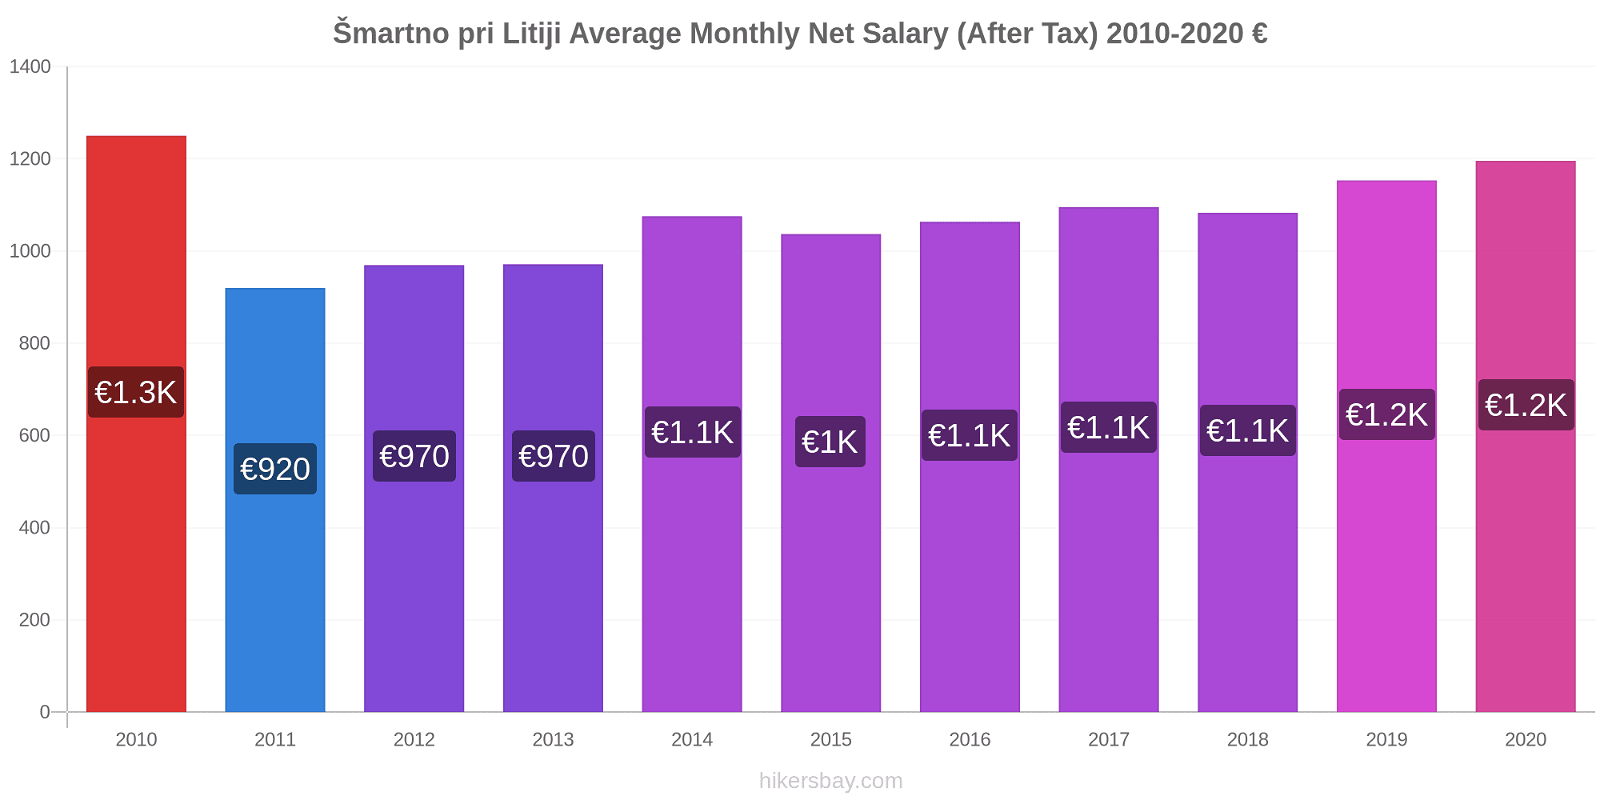 Šmartno pri Litiji price changes Average Monthly Net Salary (After Tax) hikersbay.com